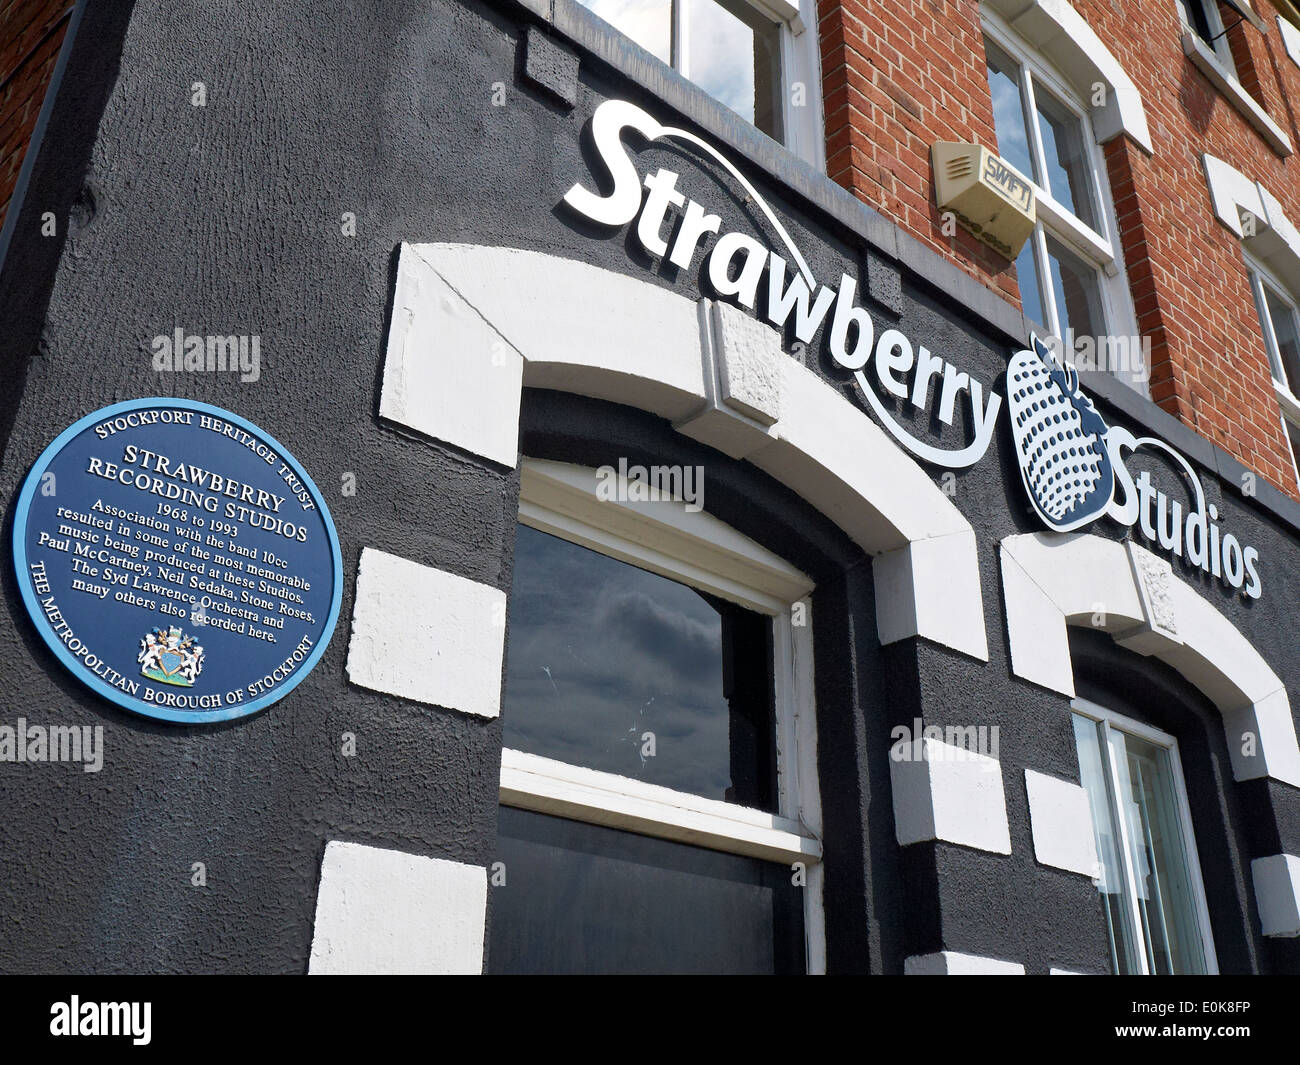 Strawberry Studios Former 10cc Recording Studio On Waterloo Road In Stockport Uk Stock Photo Alamy